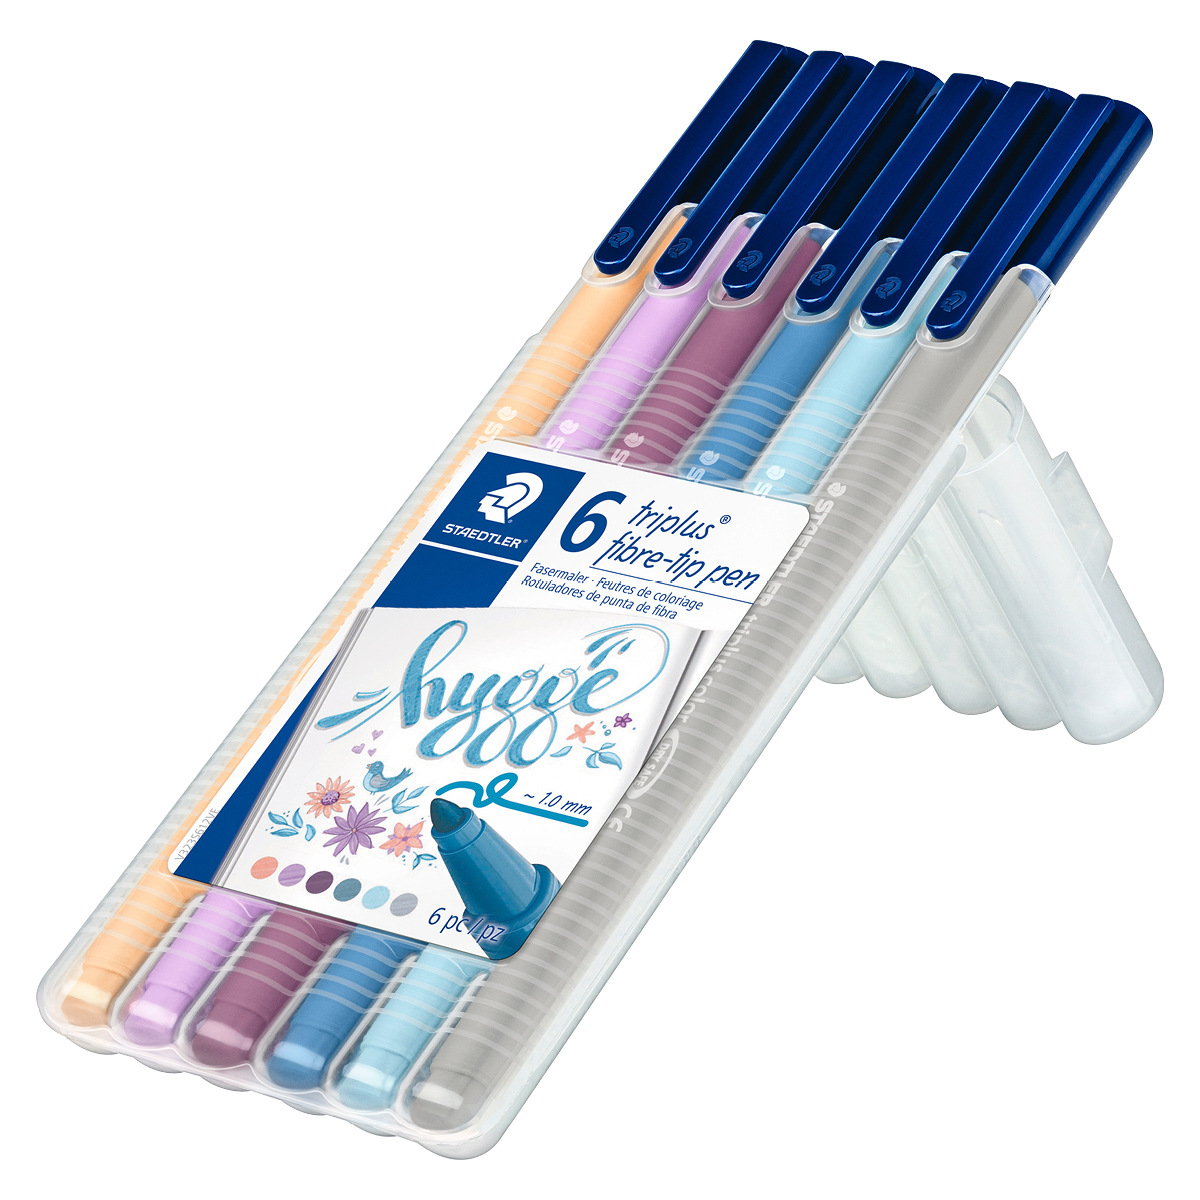 Triplus Fibre-tip Hygge in the group Pens / Artist Pens / Felt Tip Pens at Pen Store (126598)